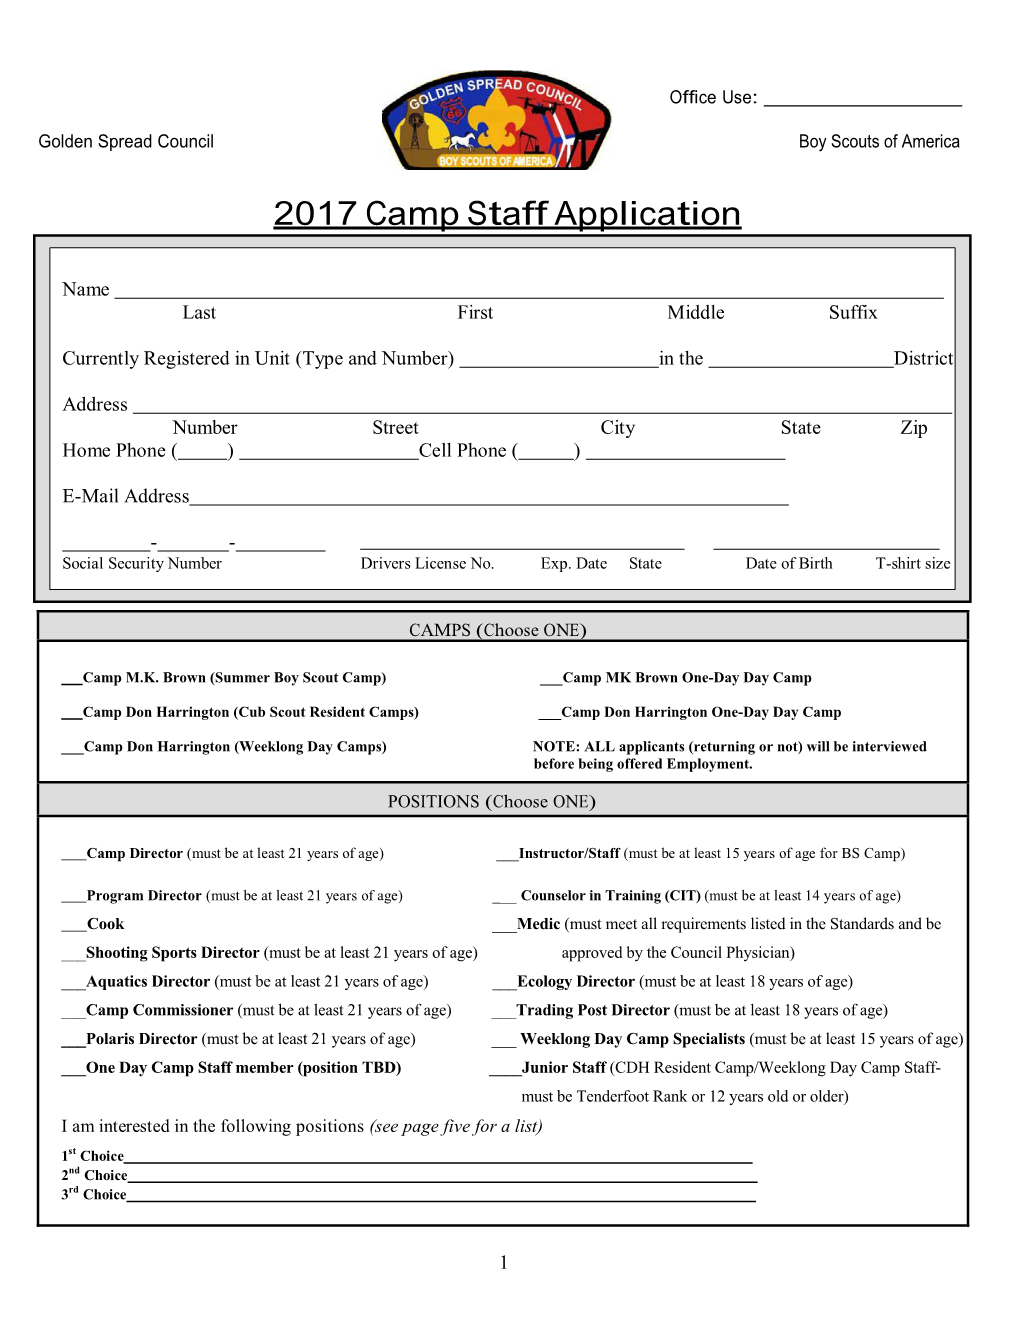 2017 Camp Staff Application